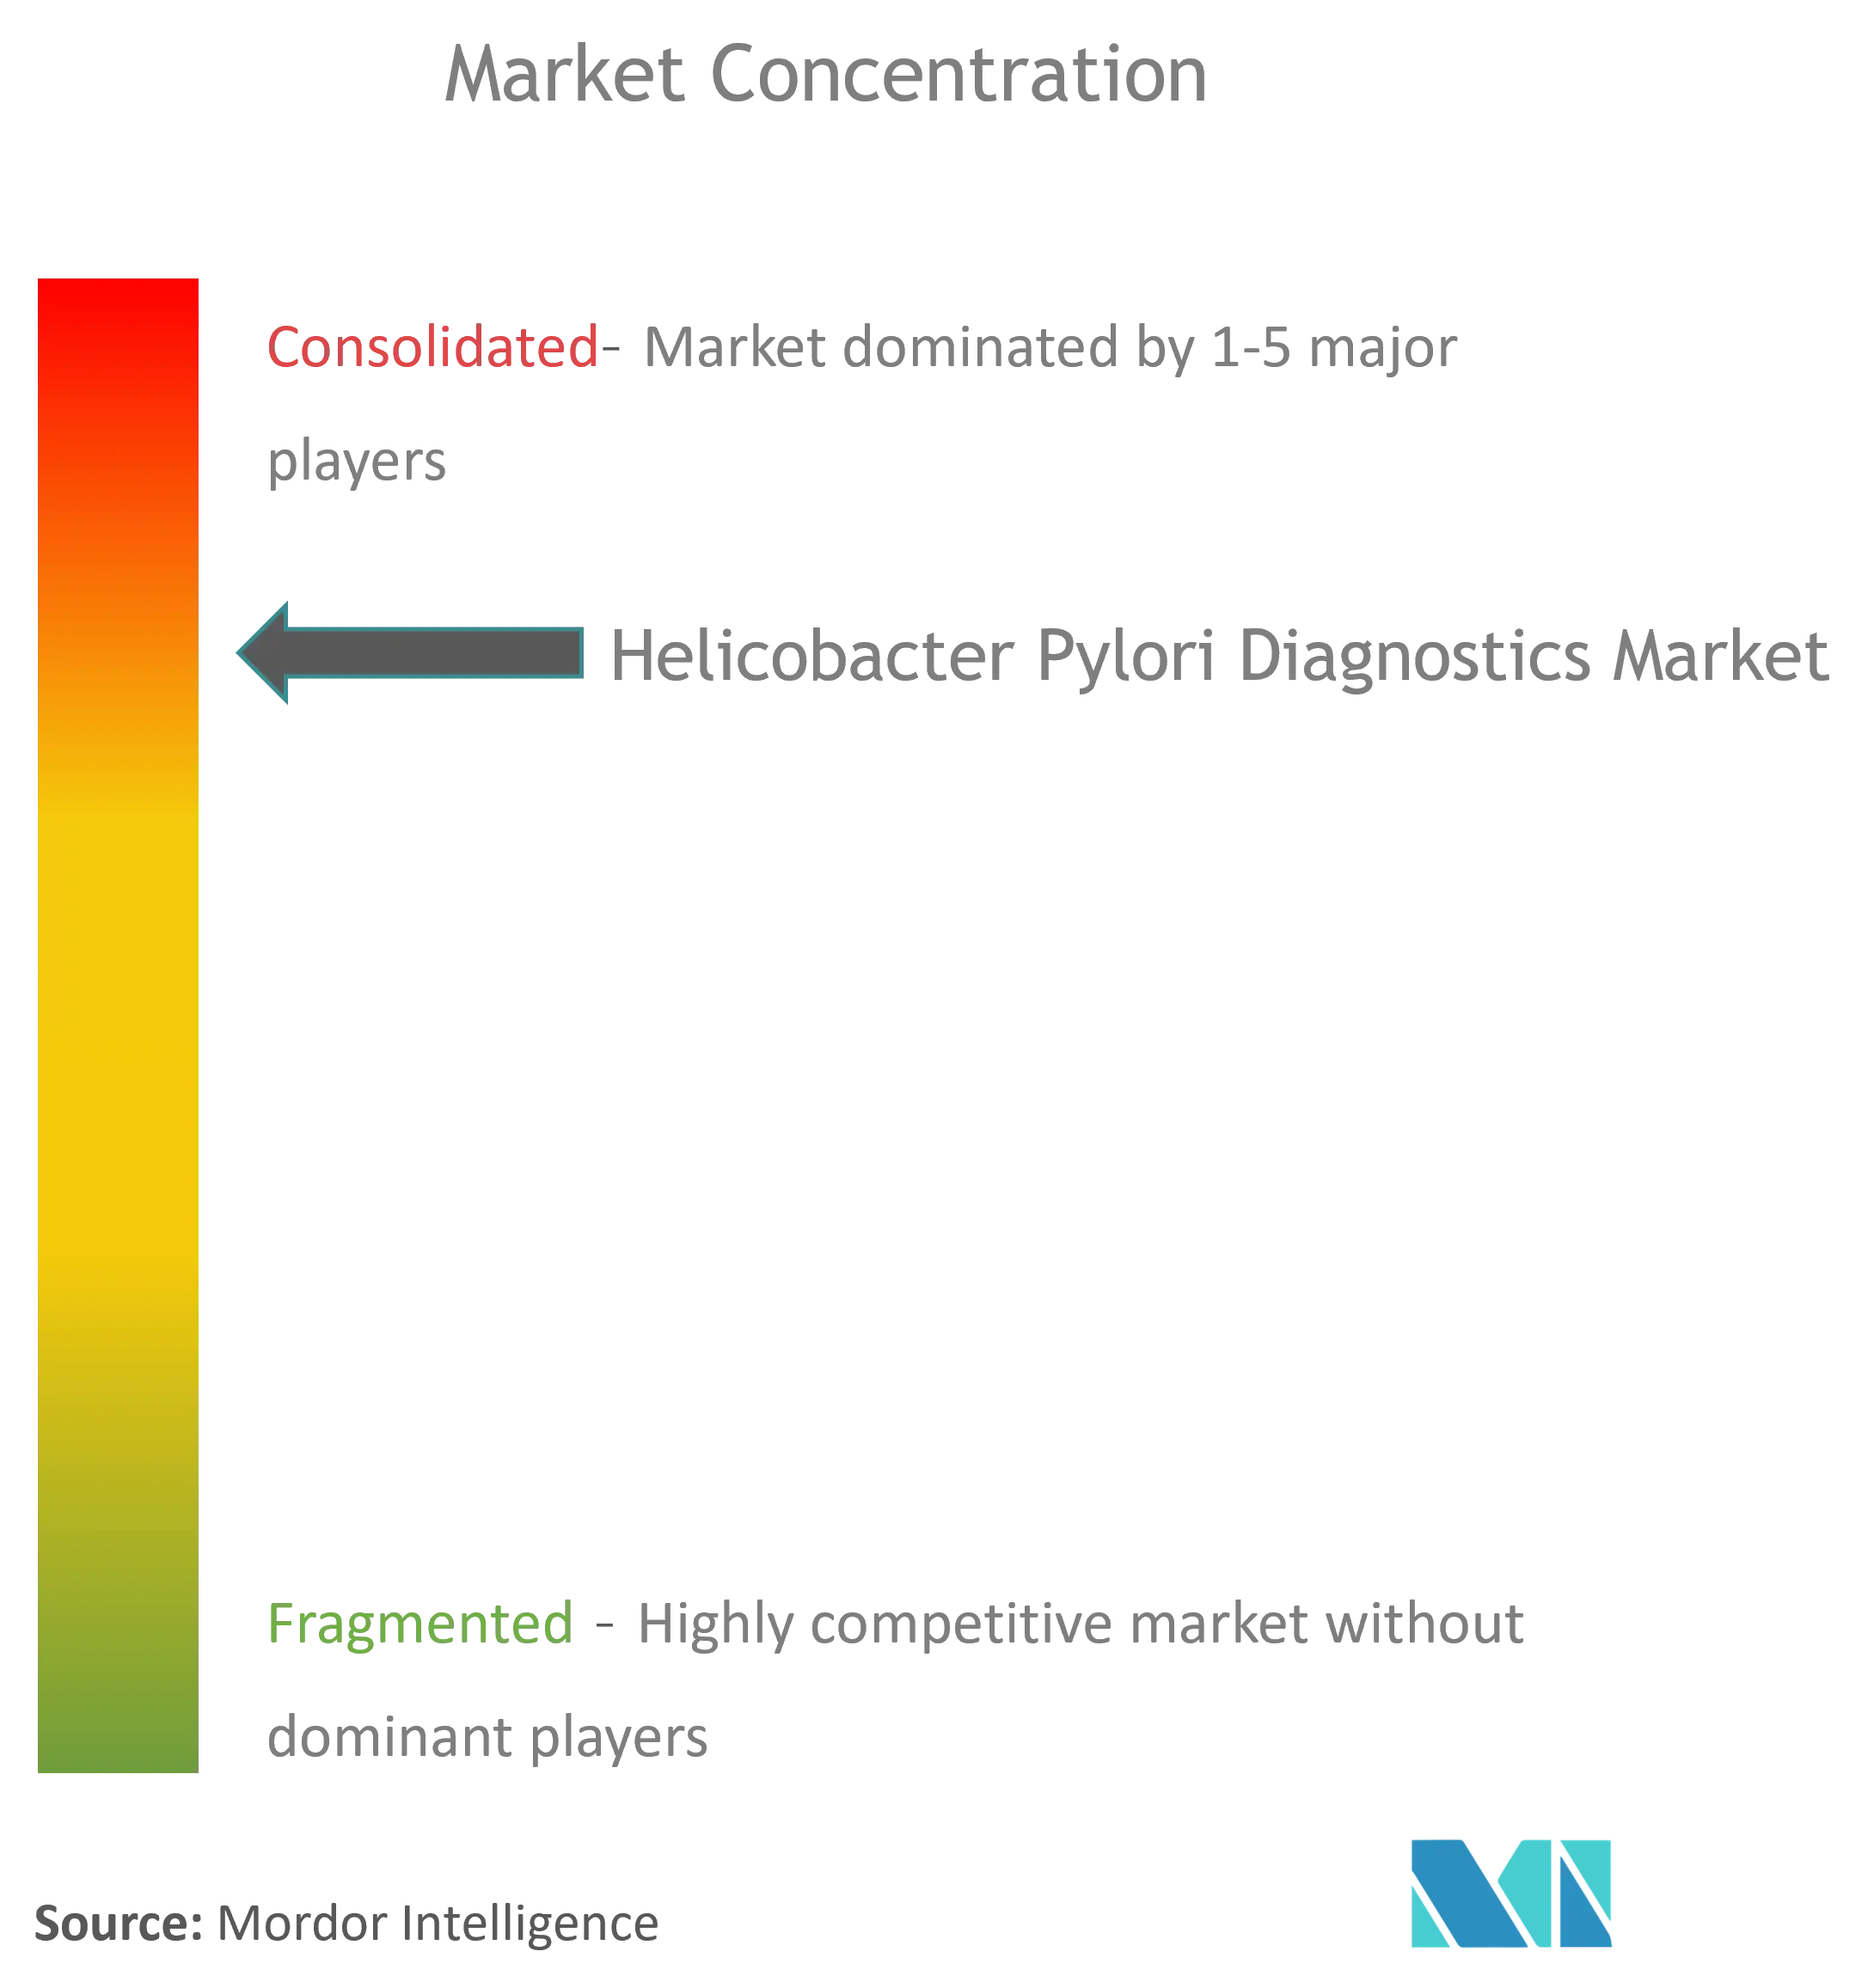 Global Helicobacter Pylori Diagnostics Market Concentration